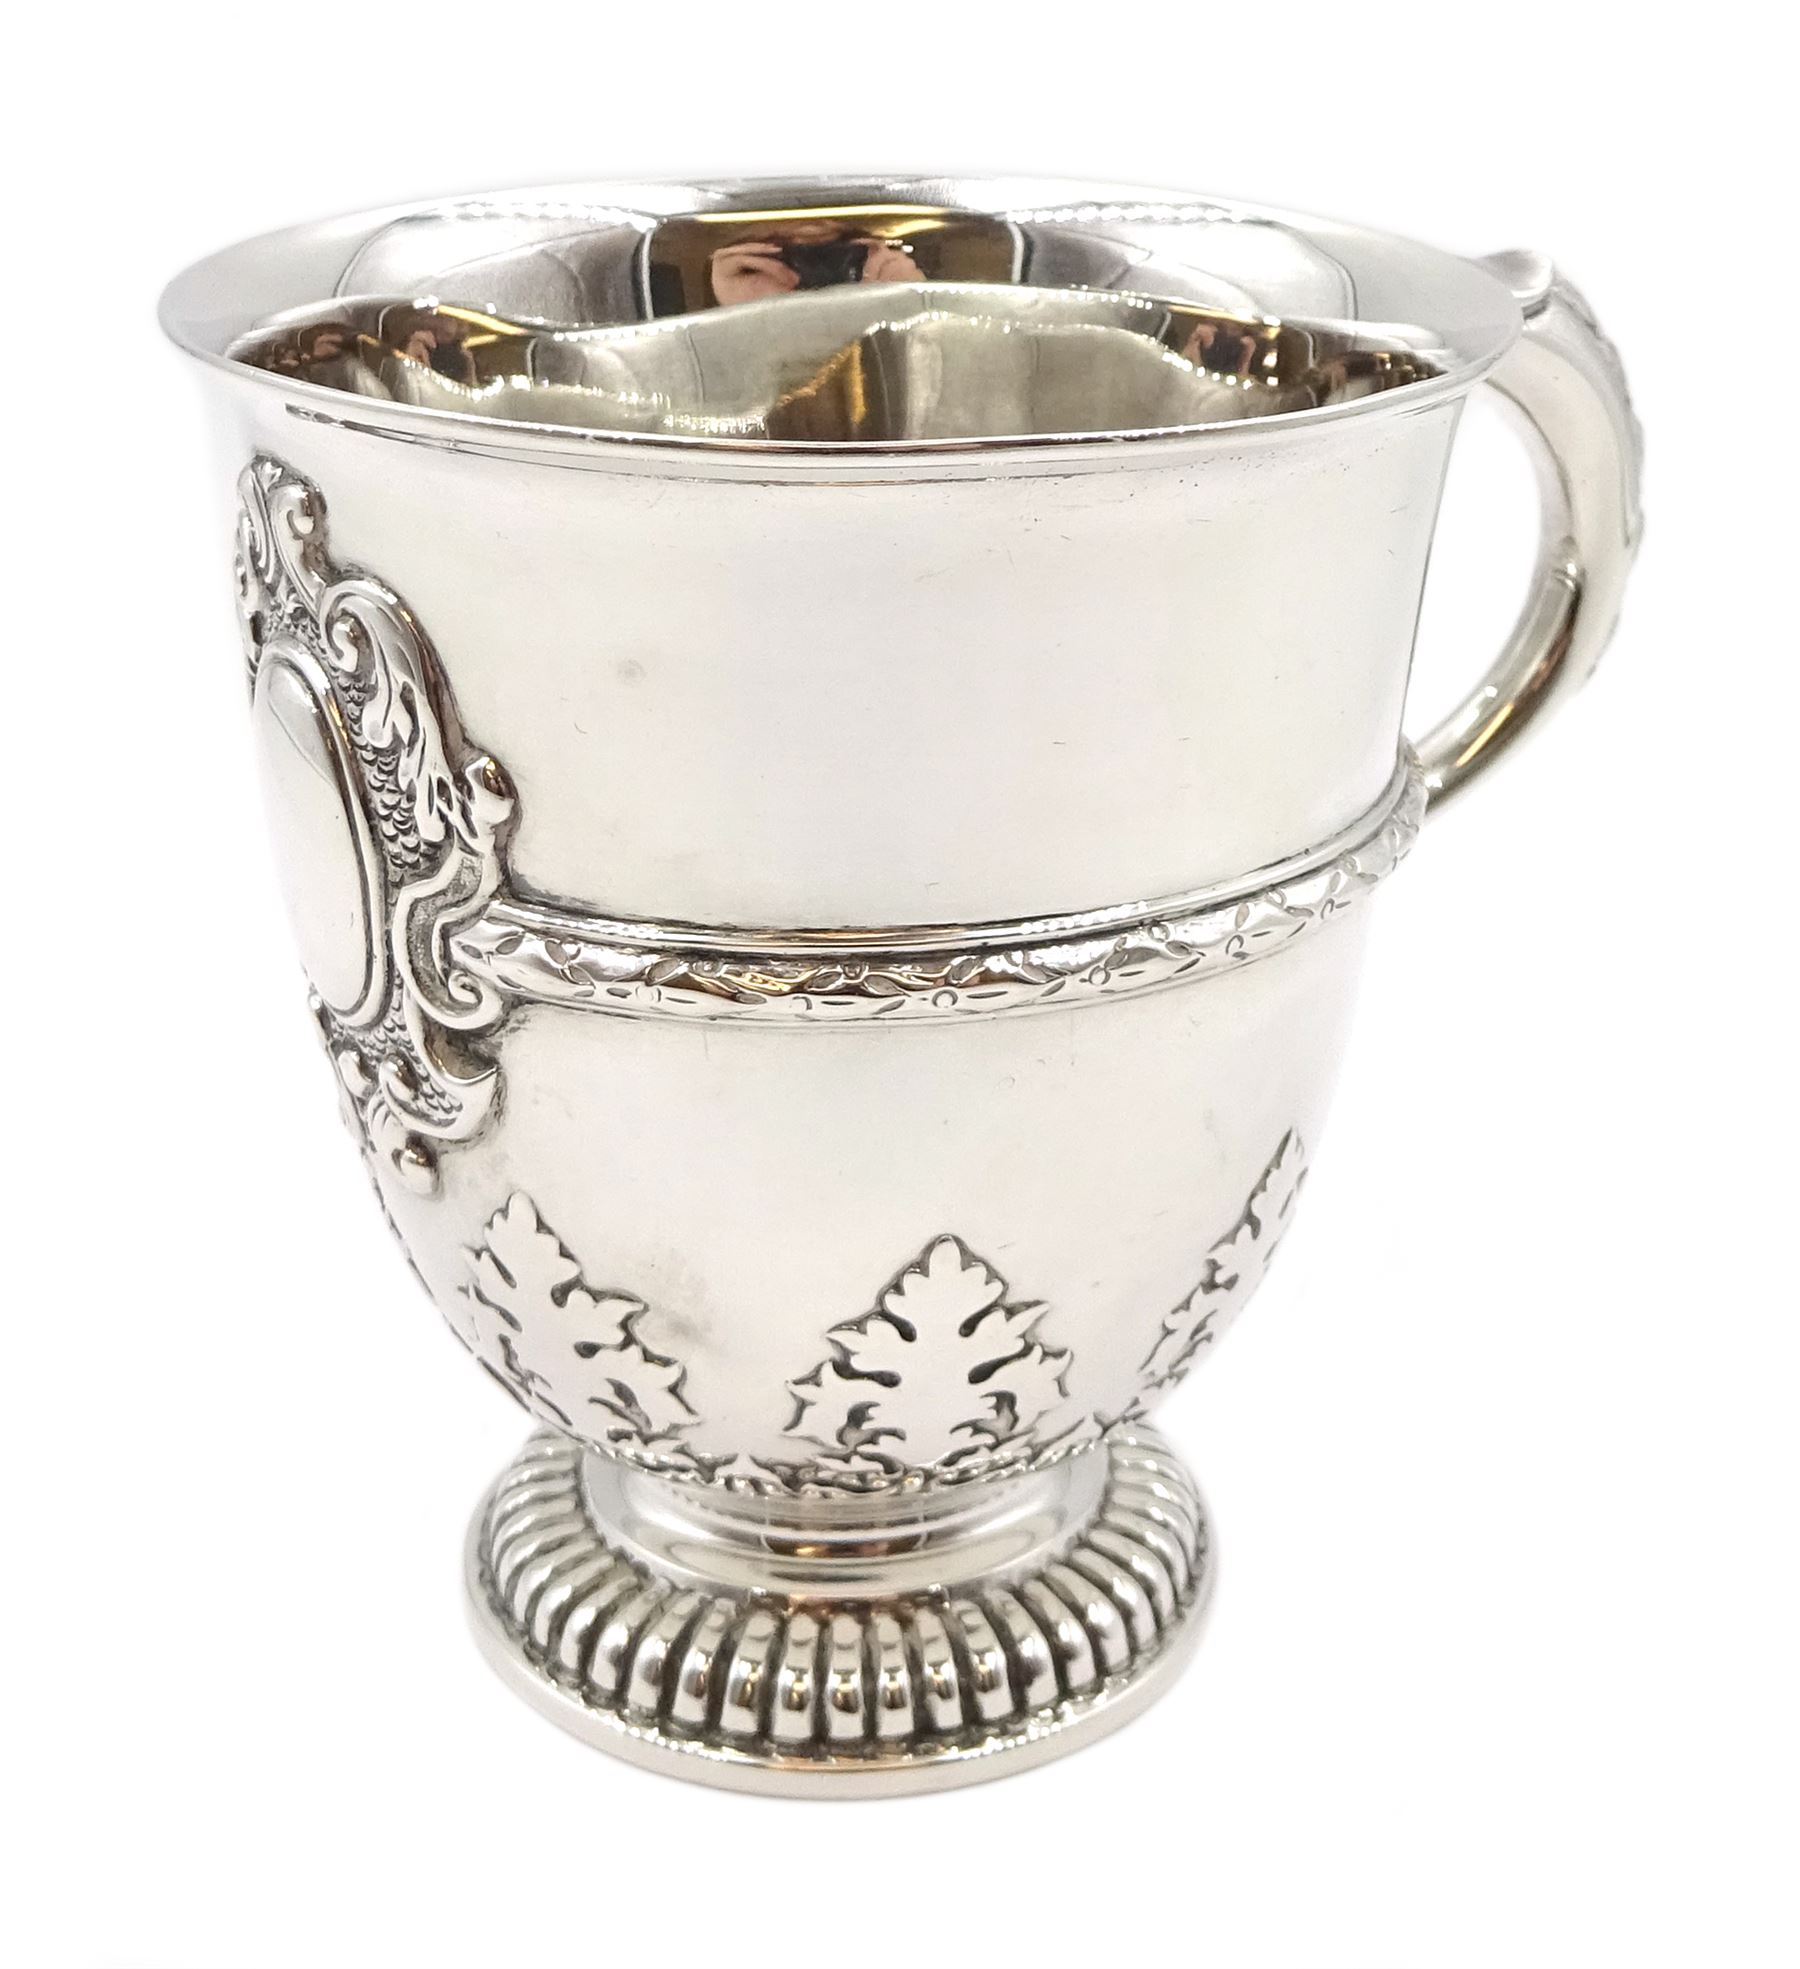 Edwardian silver cup